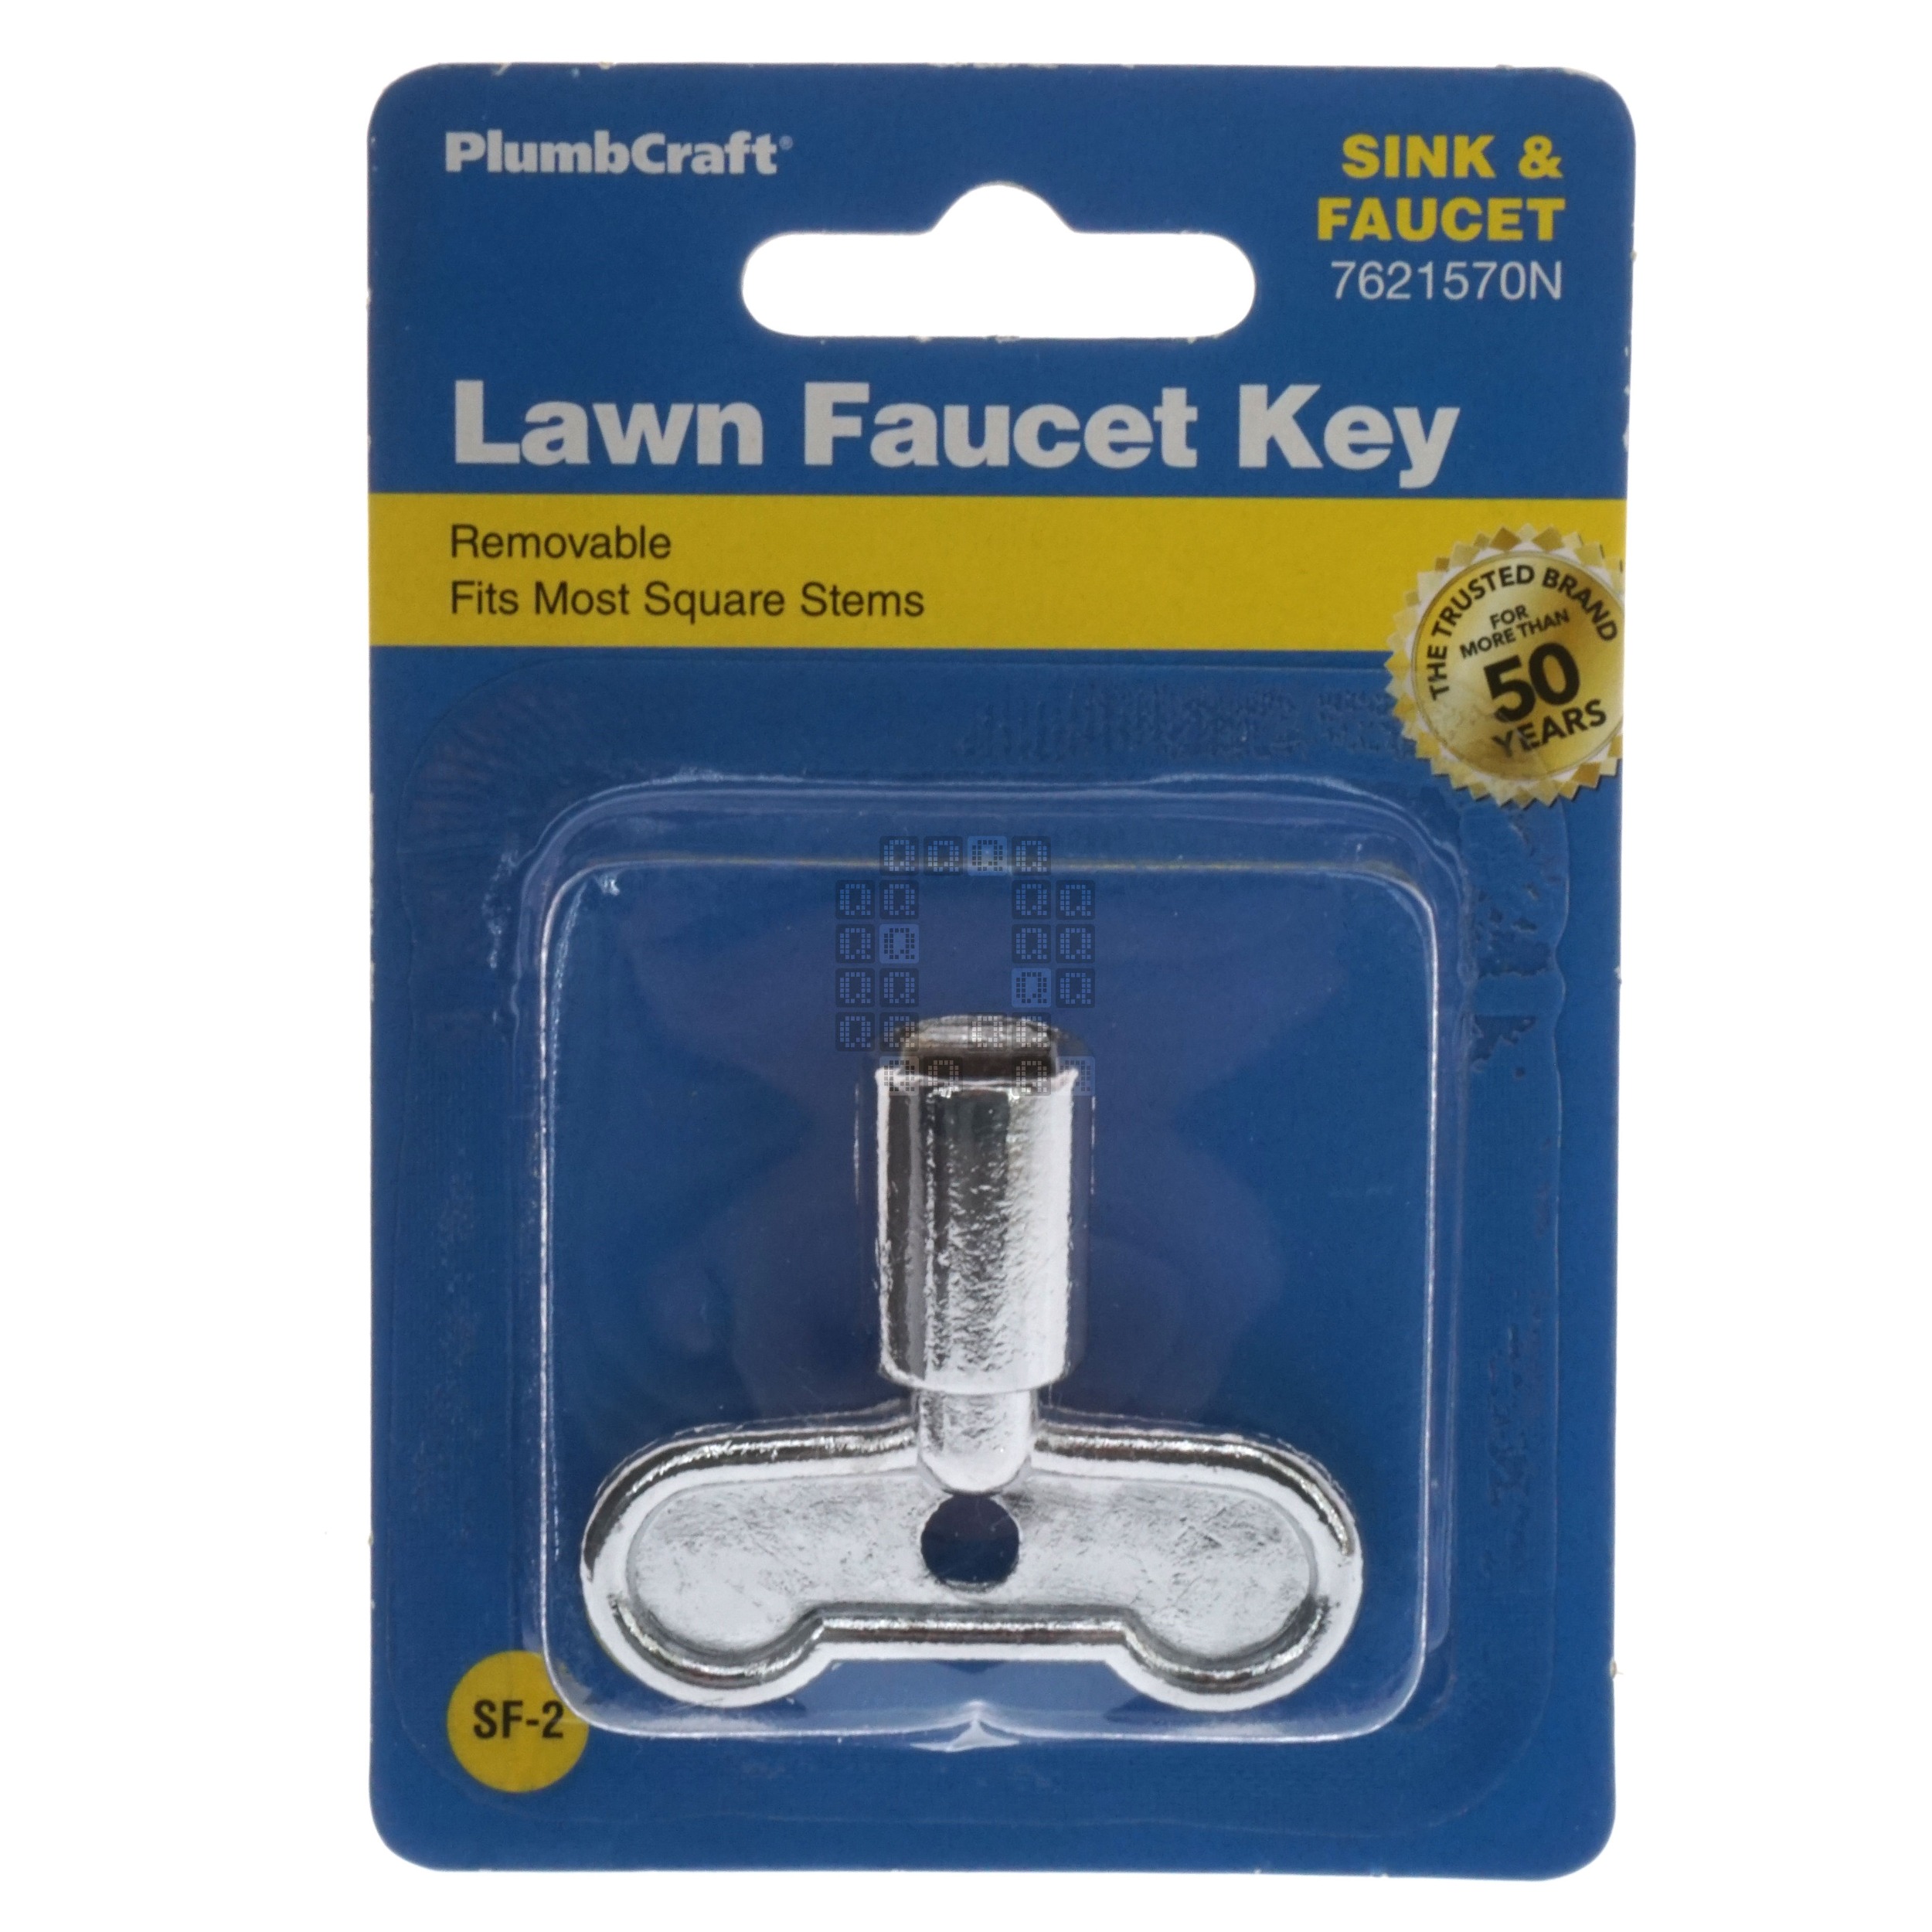 PlumbCraft 7621570N Removeable Lawn Faucet Key